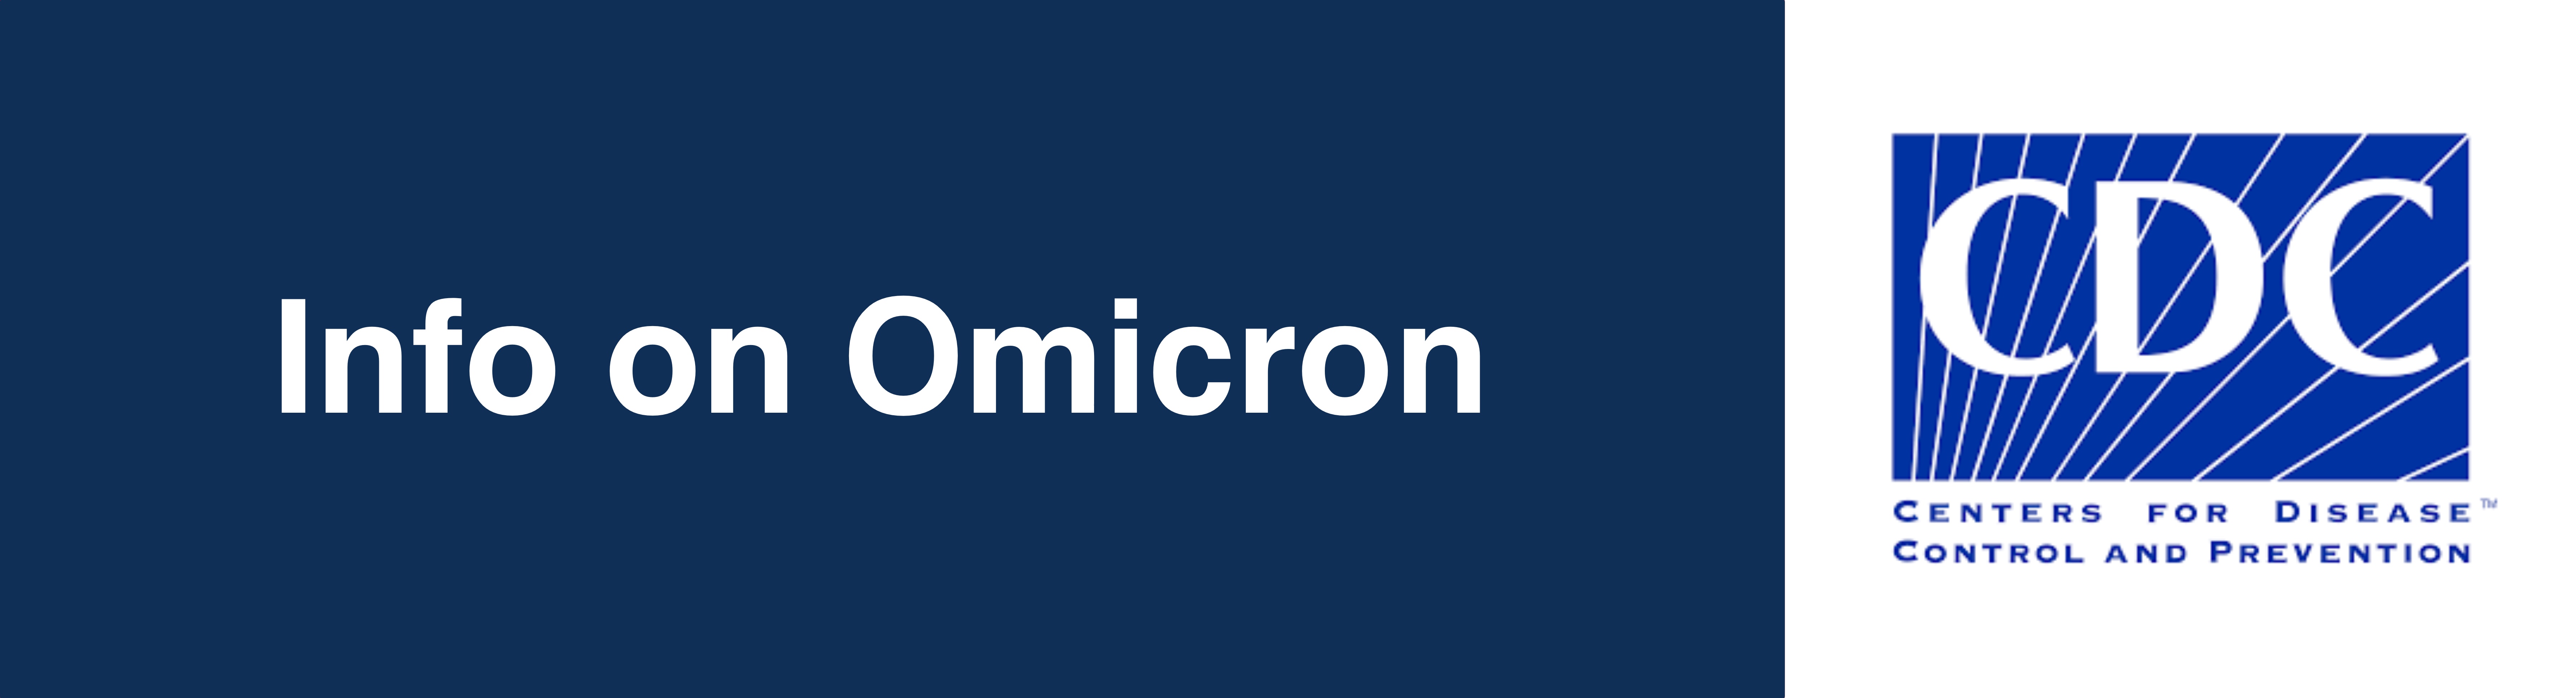 CDC - Info on Omicron